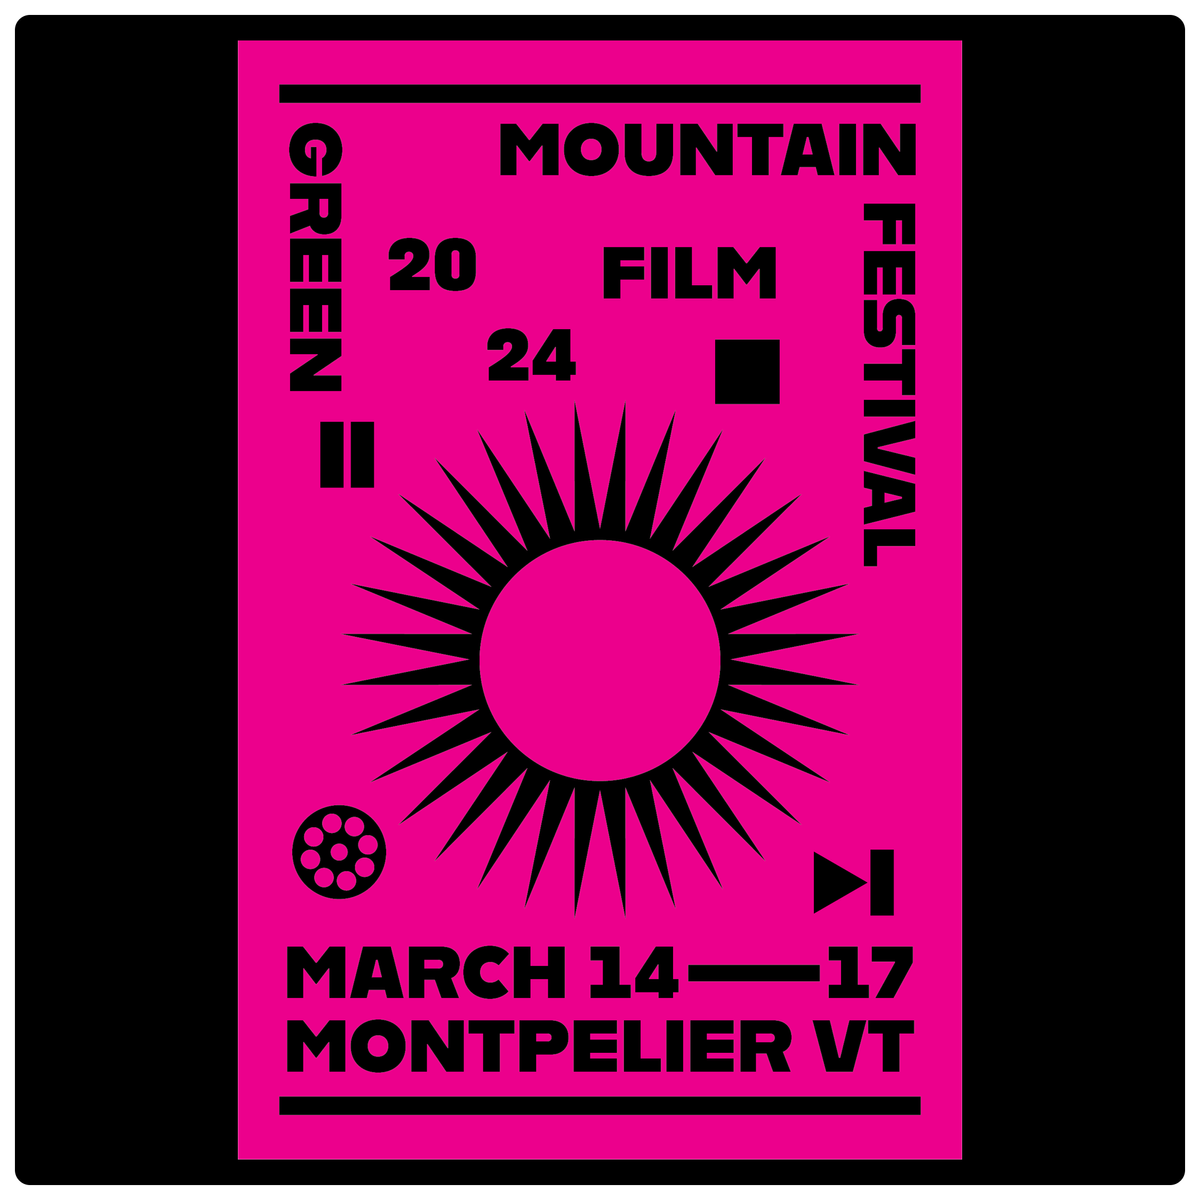 ✨🎺 The GREEN MOUNTAIN FILM FESTIVAL program drops this week!